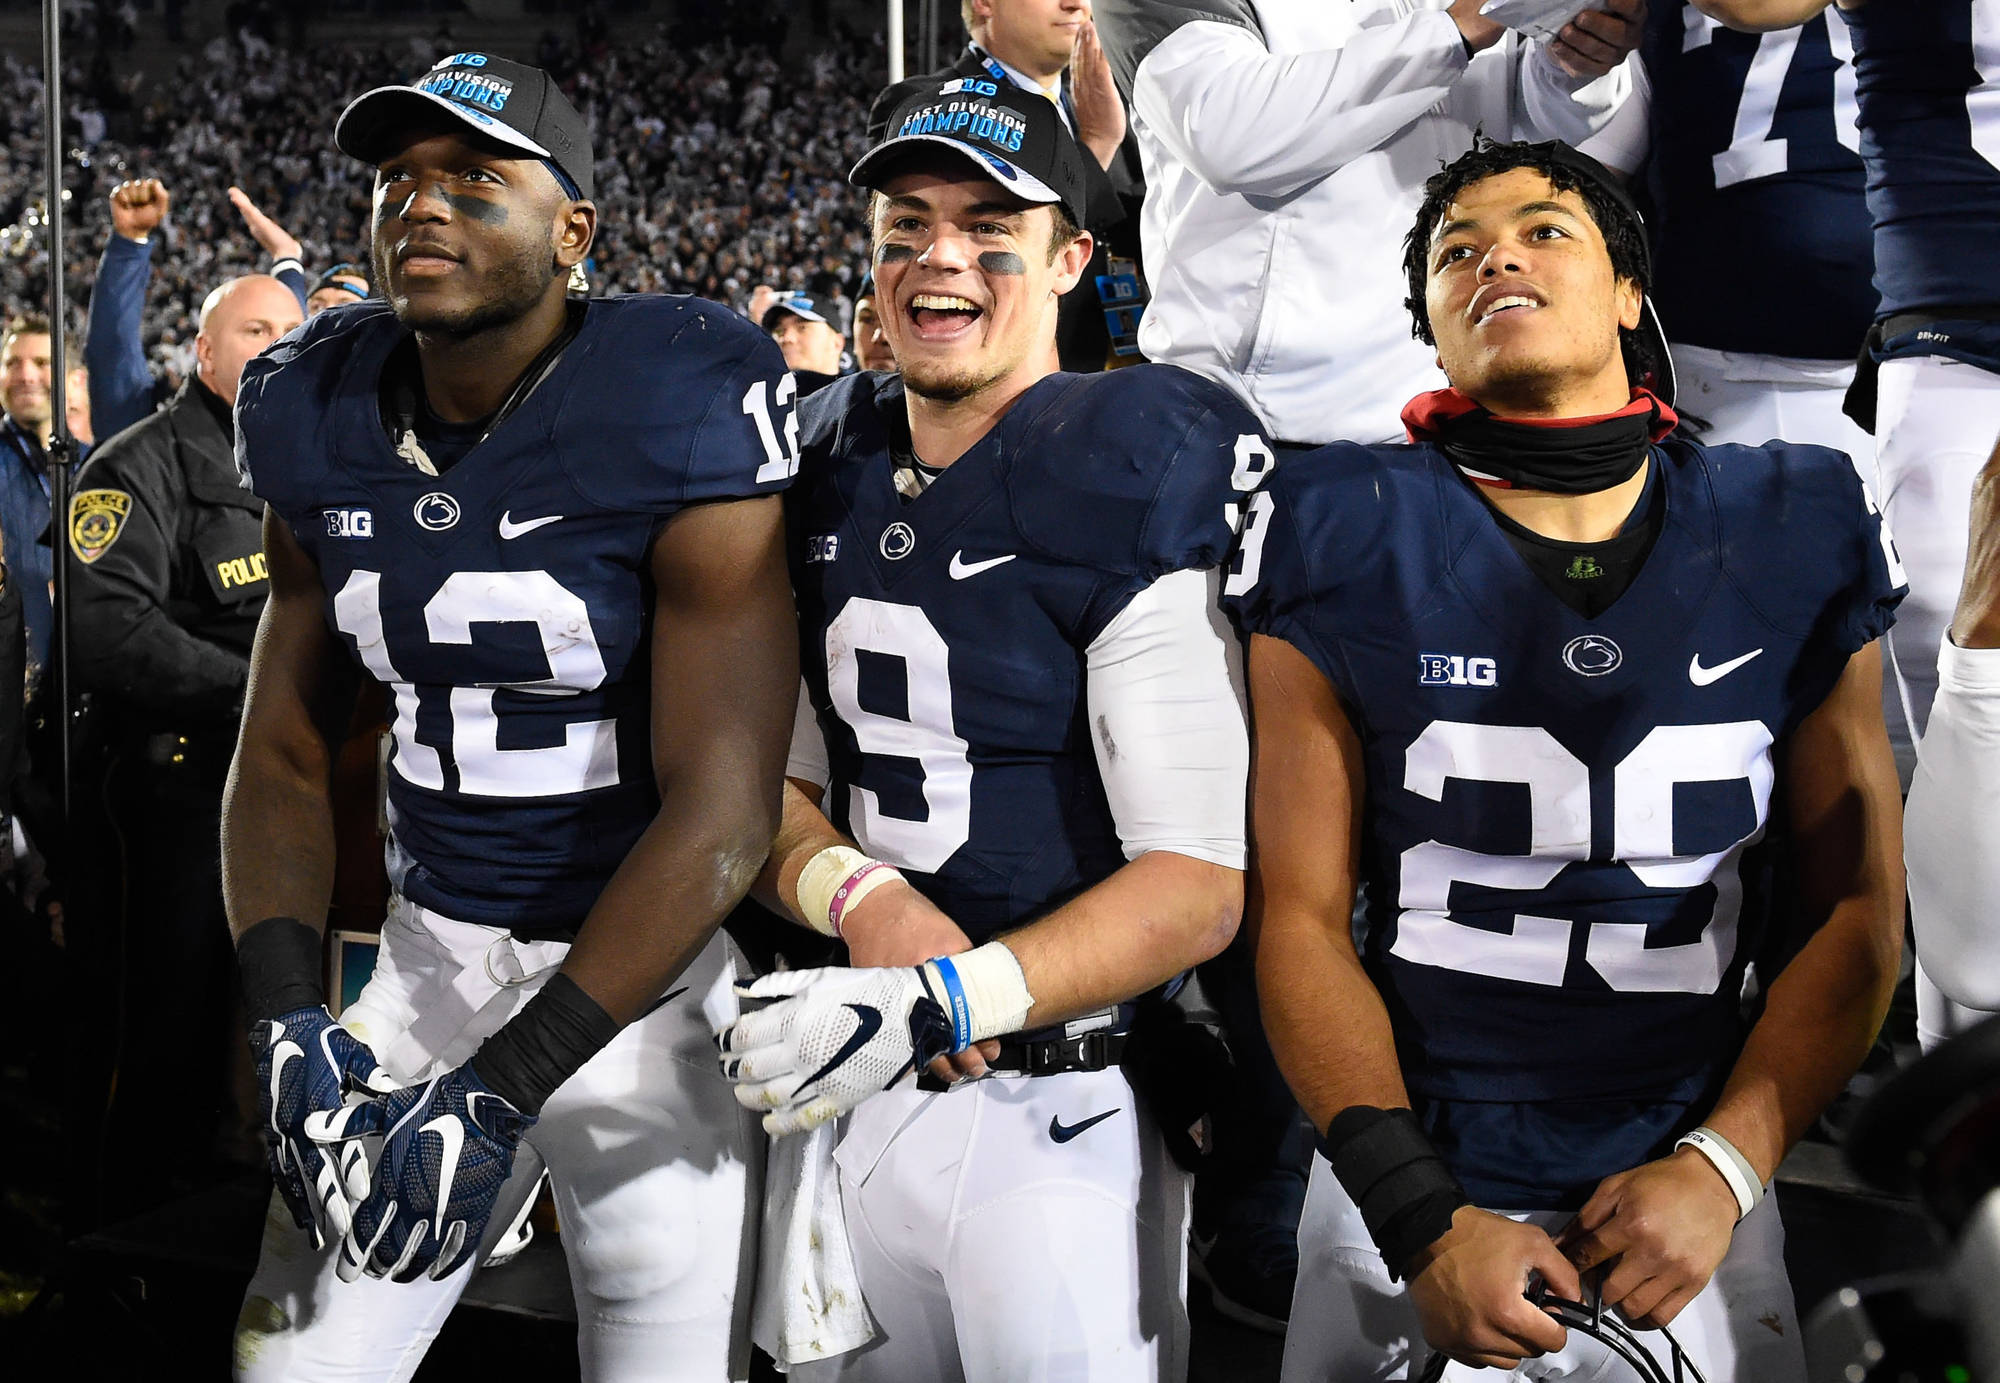 Penn State Headlines Crazy College Football Weekend